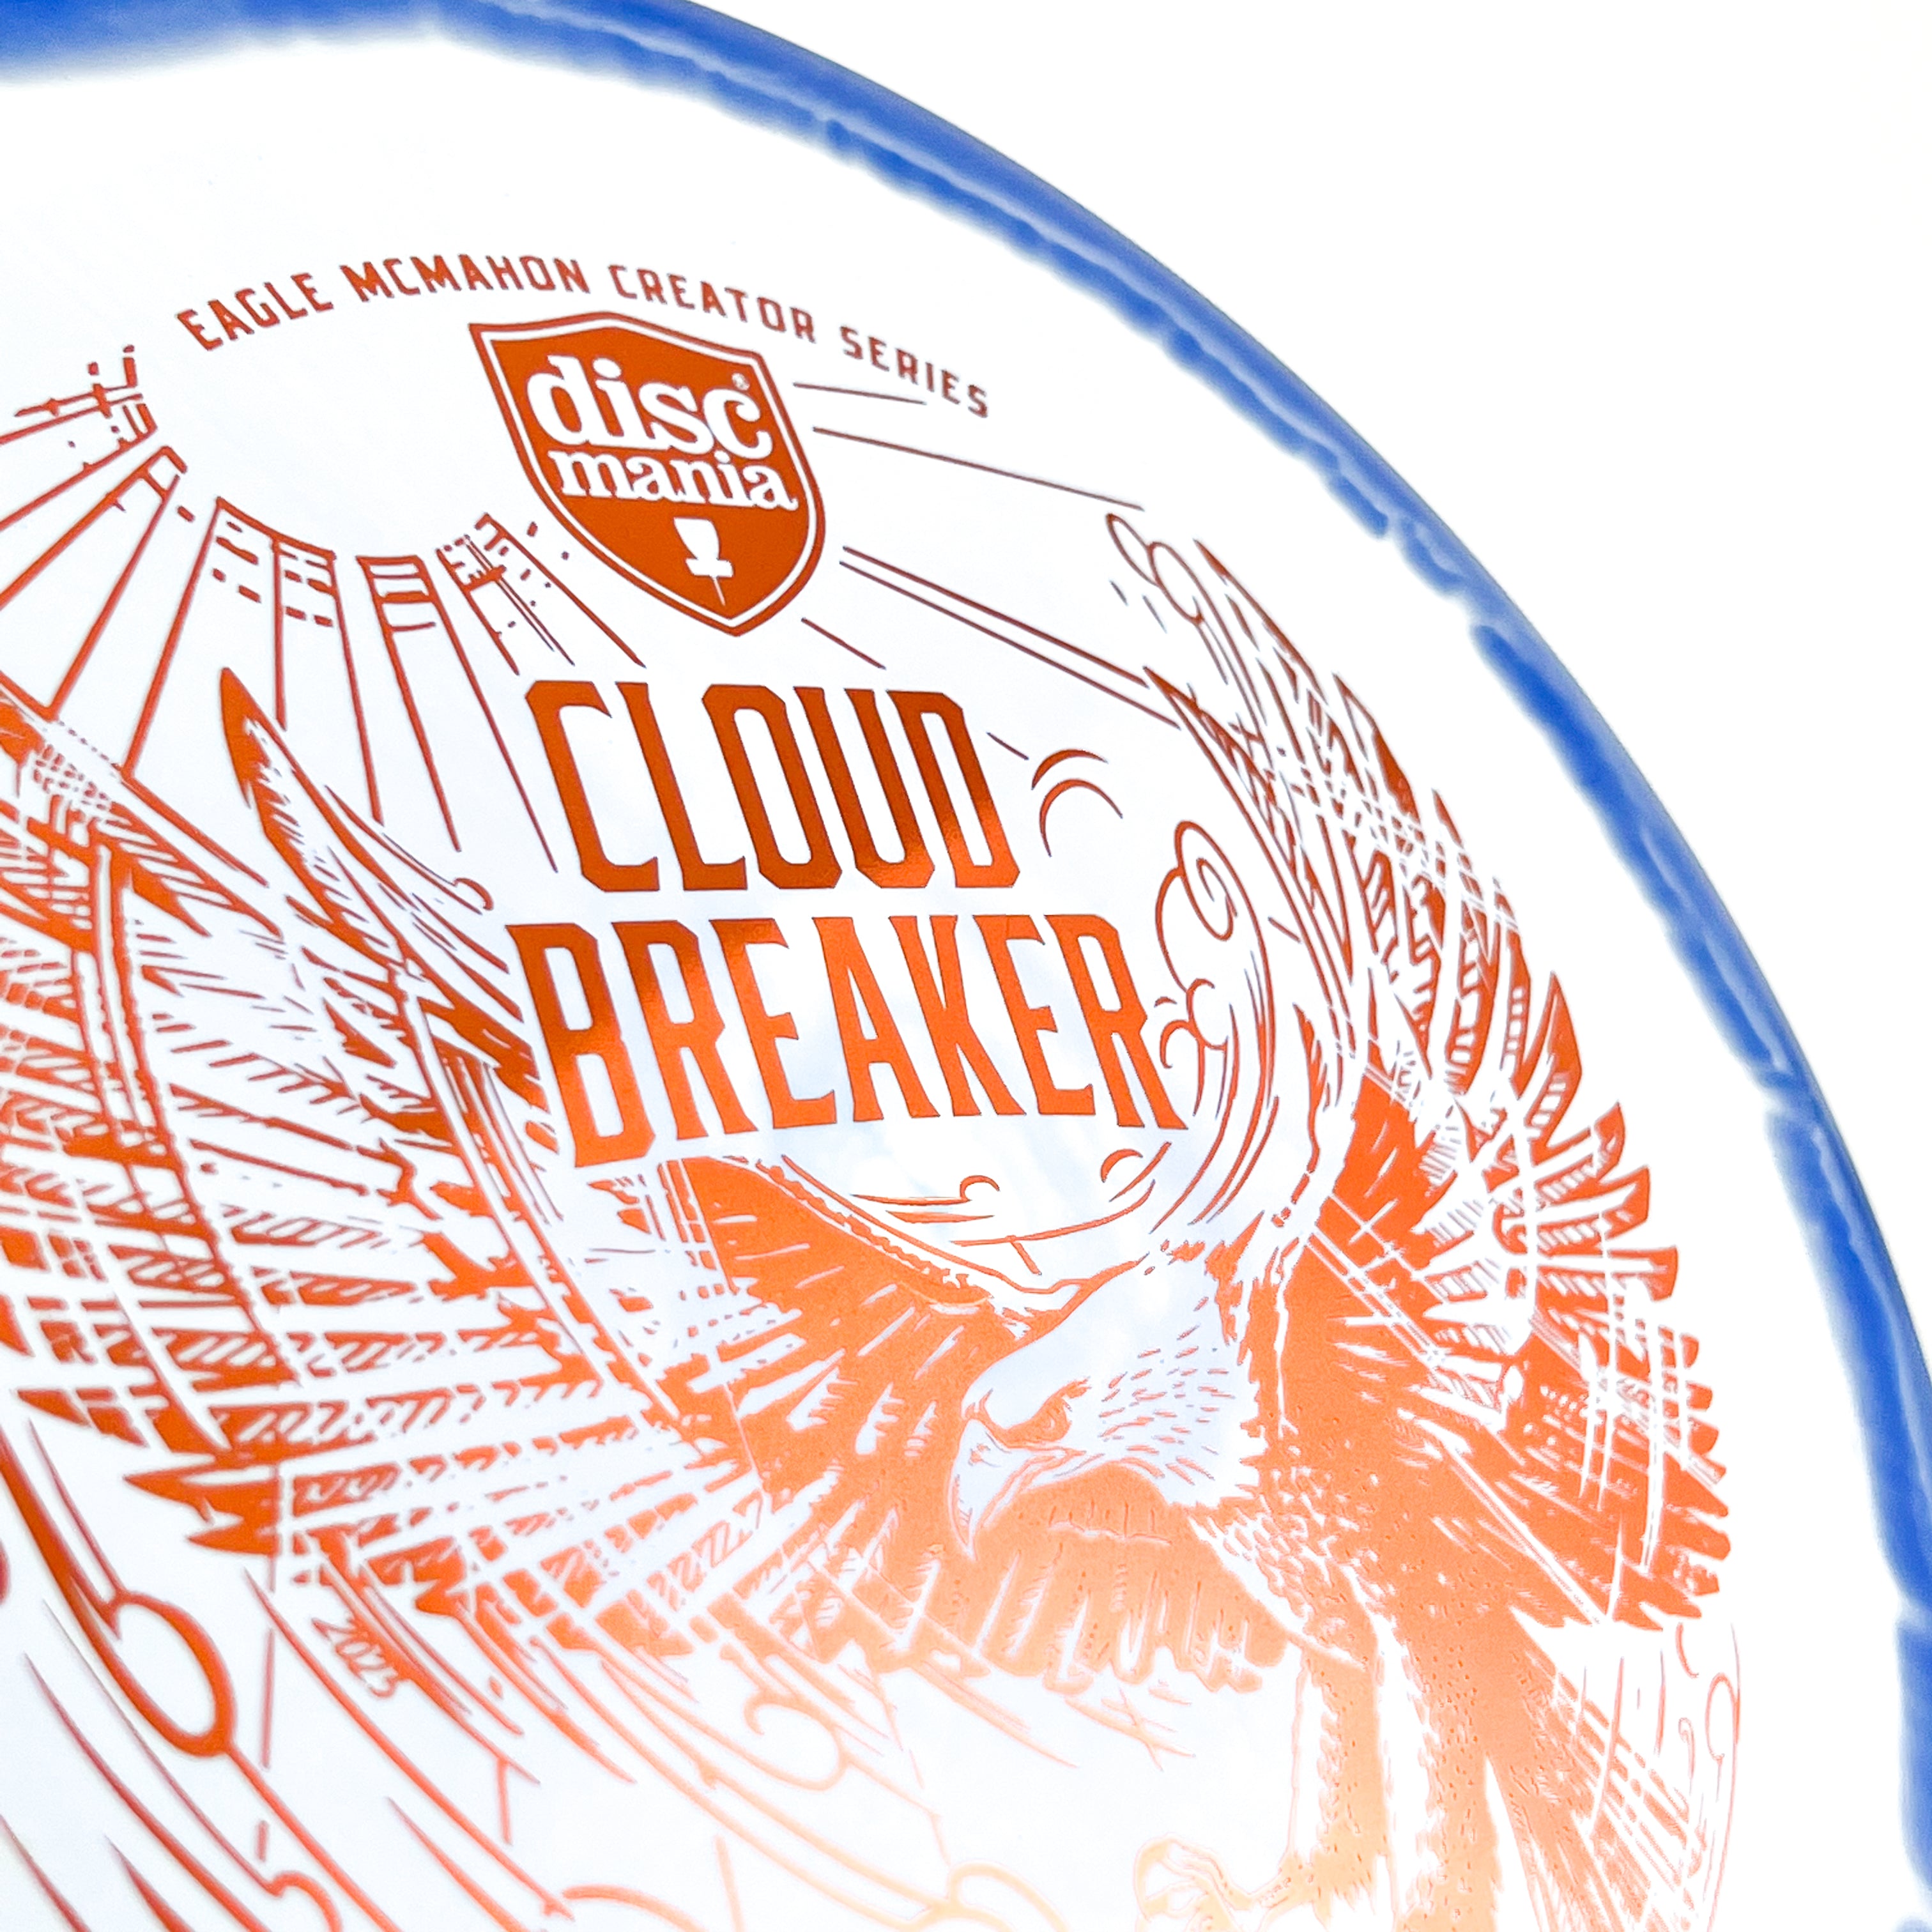 Eagle McMahon Creator Series Horizon Cloud Breaker